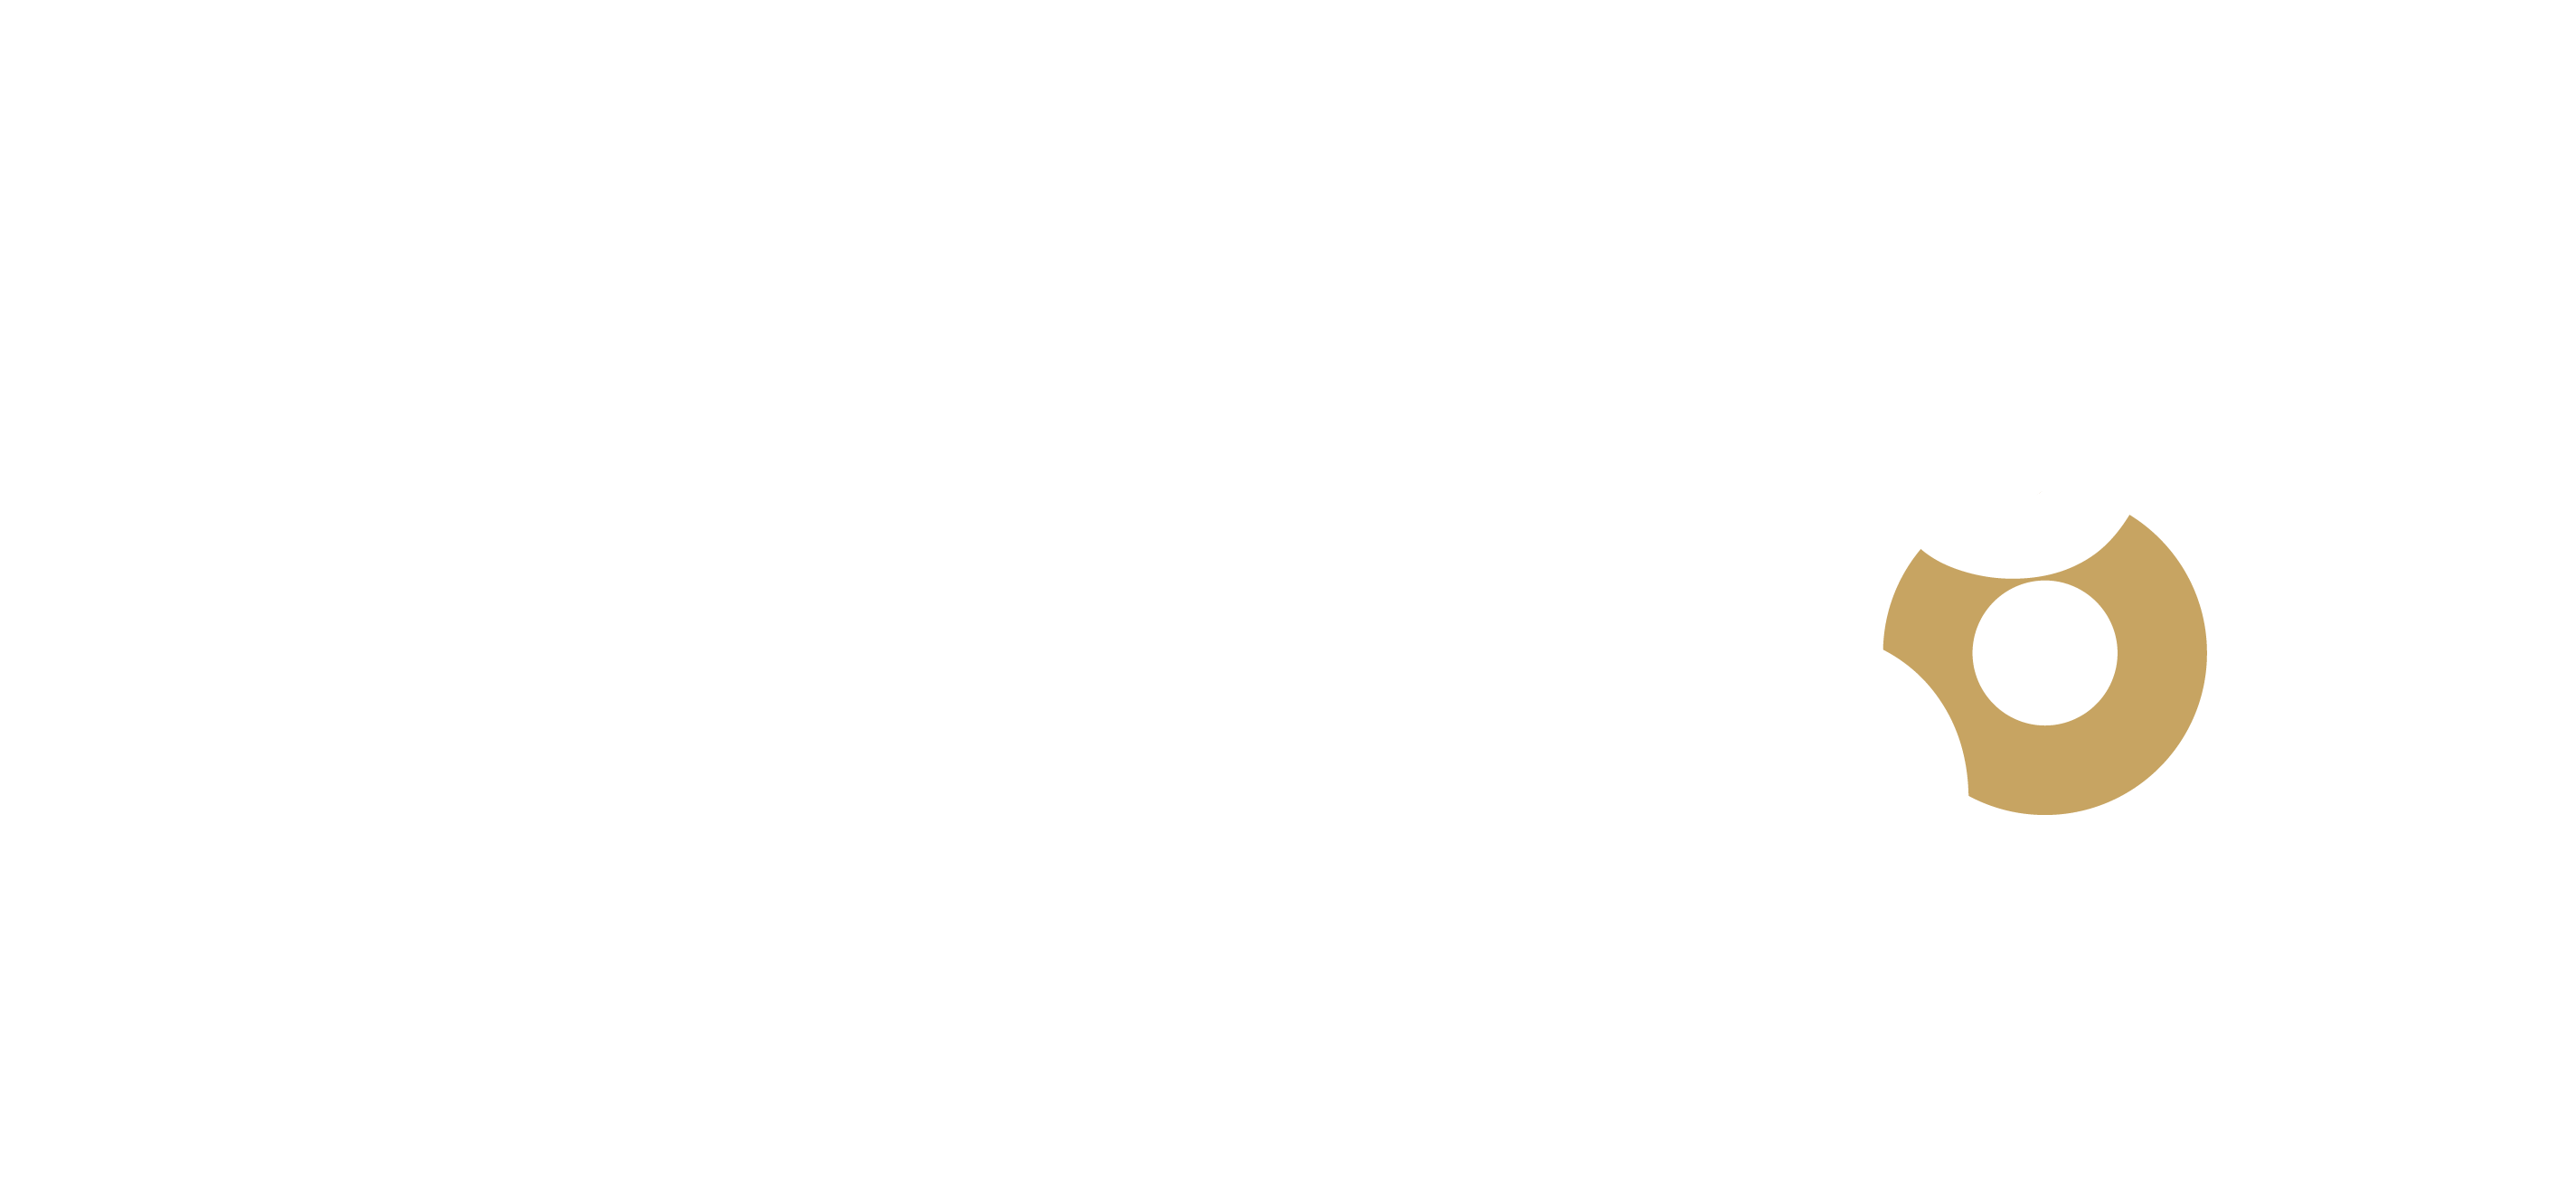 MM logo white